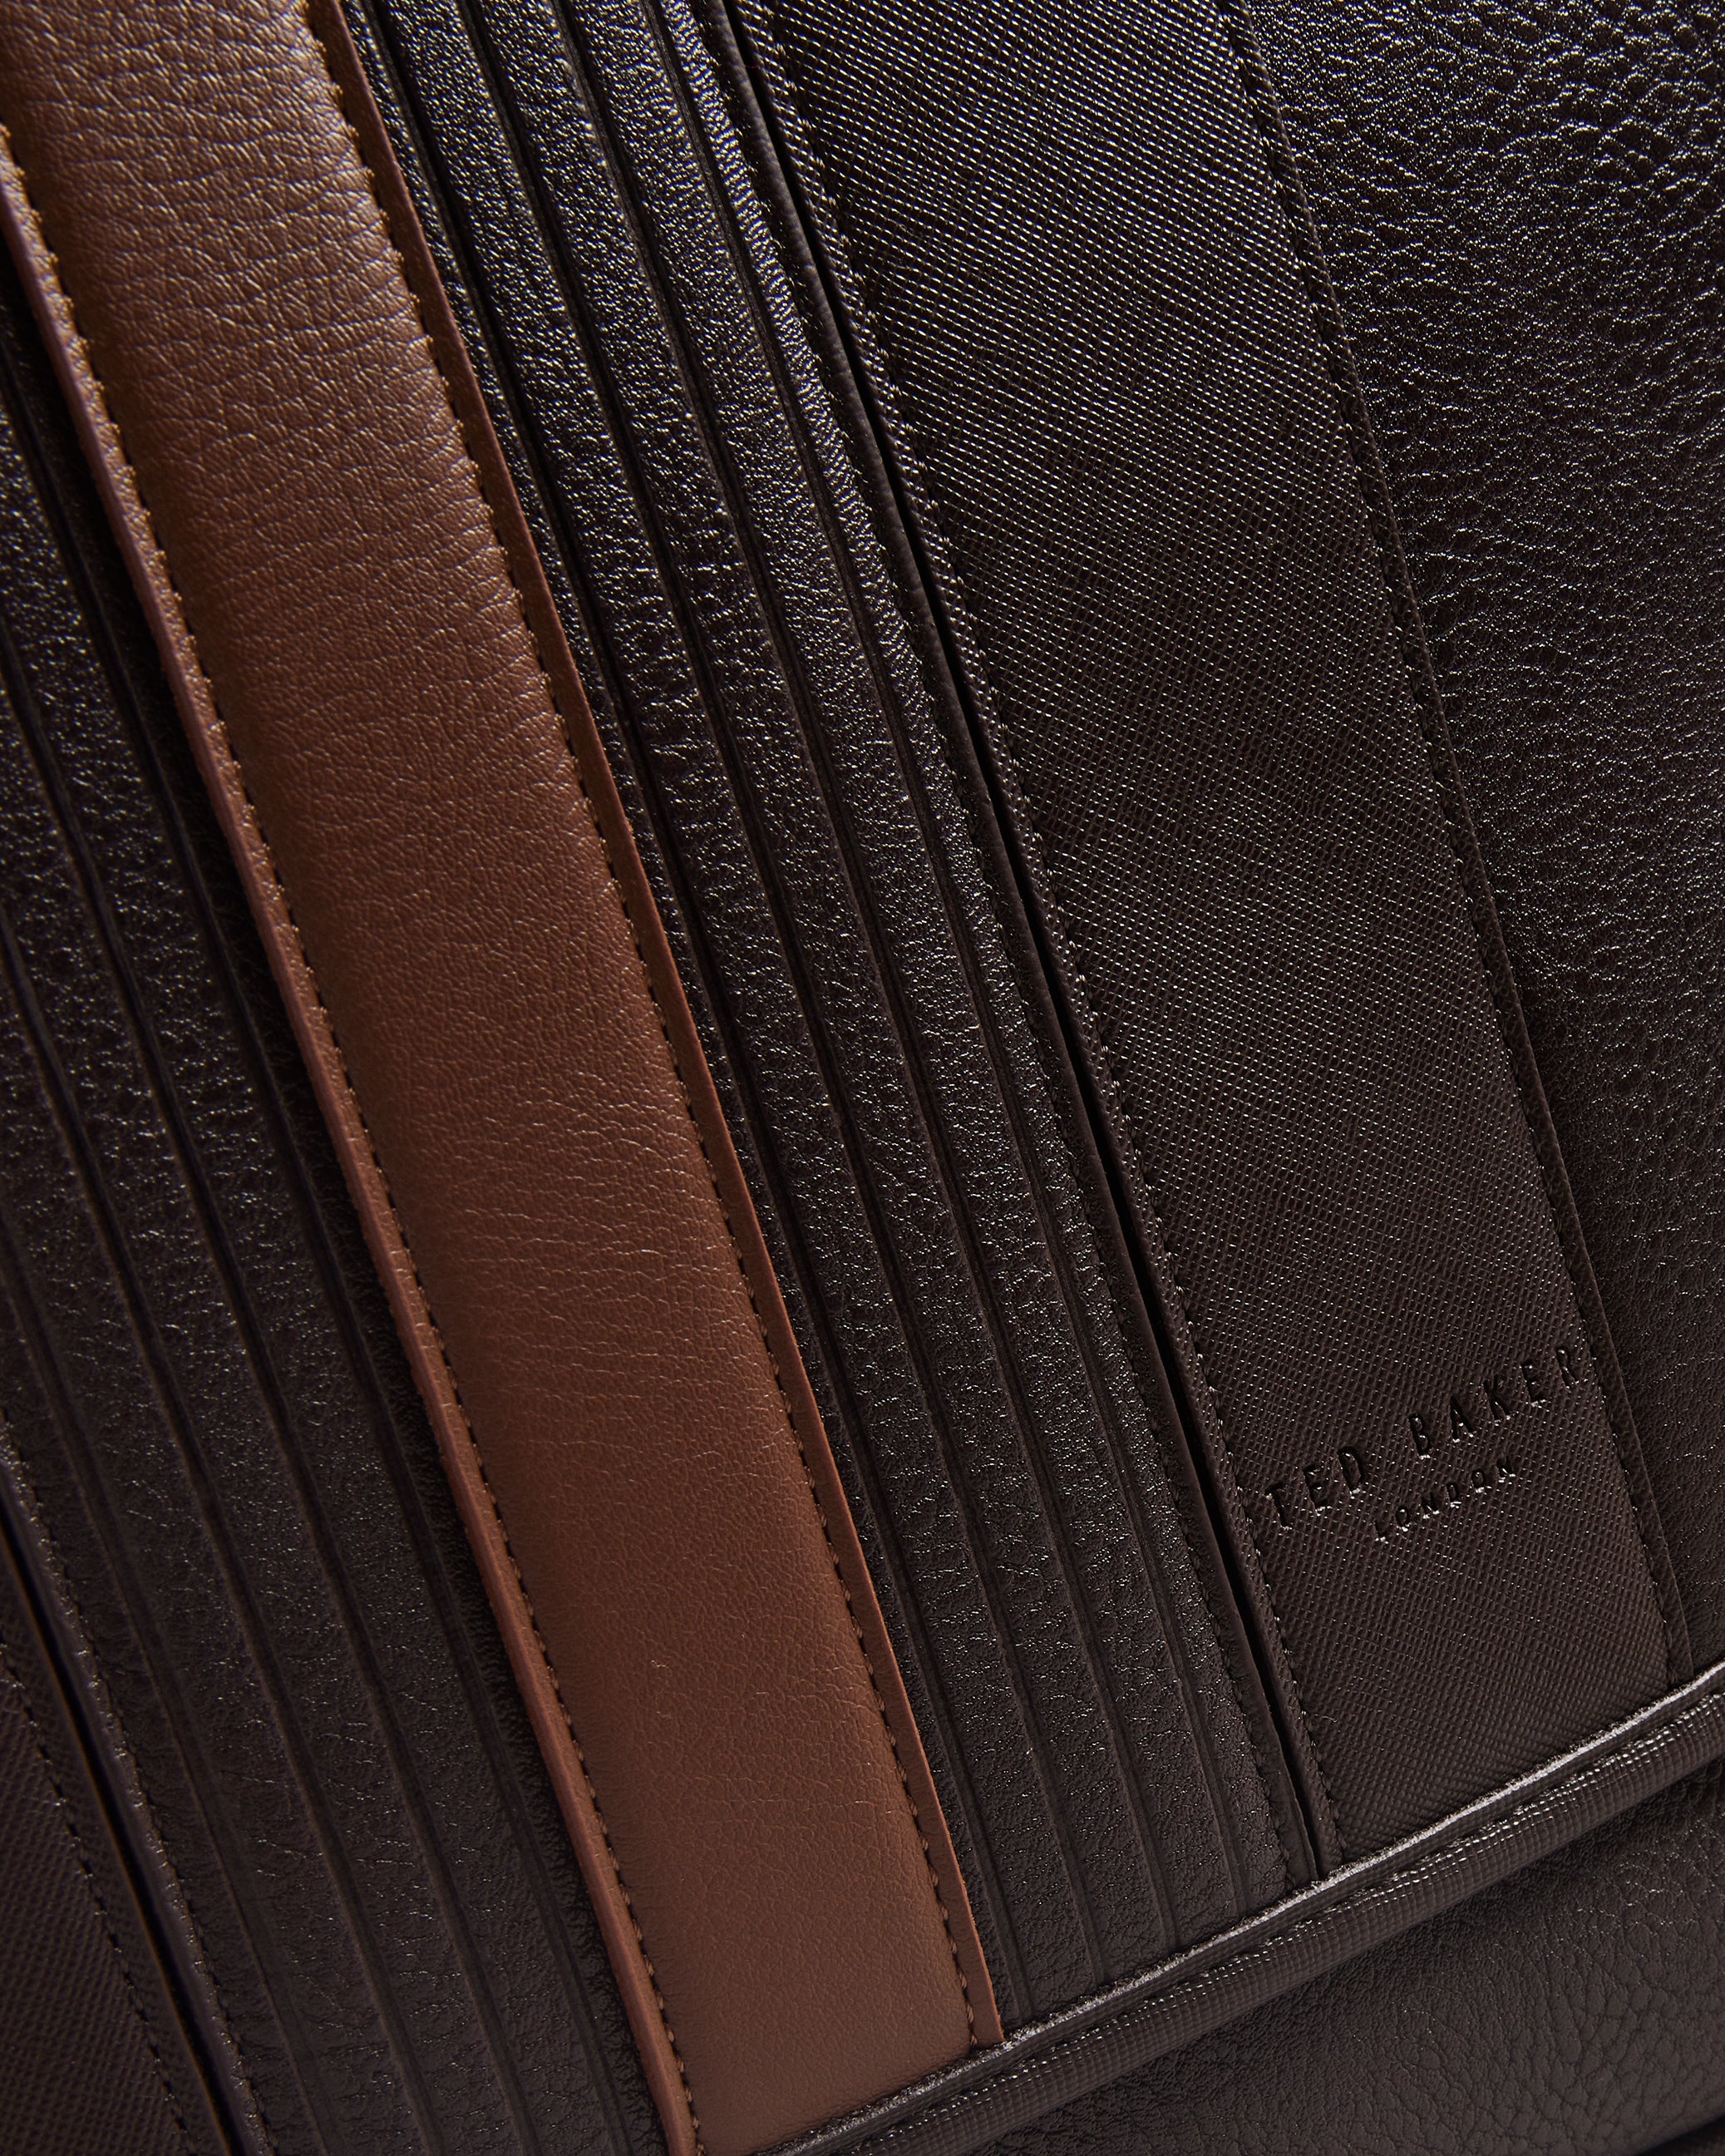 Evelake Striped Faux Leather Messenger Bag Brn-Choc